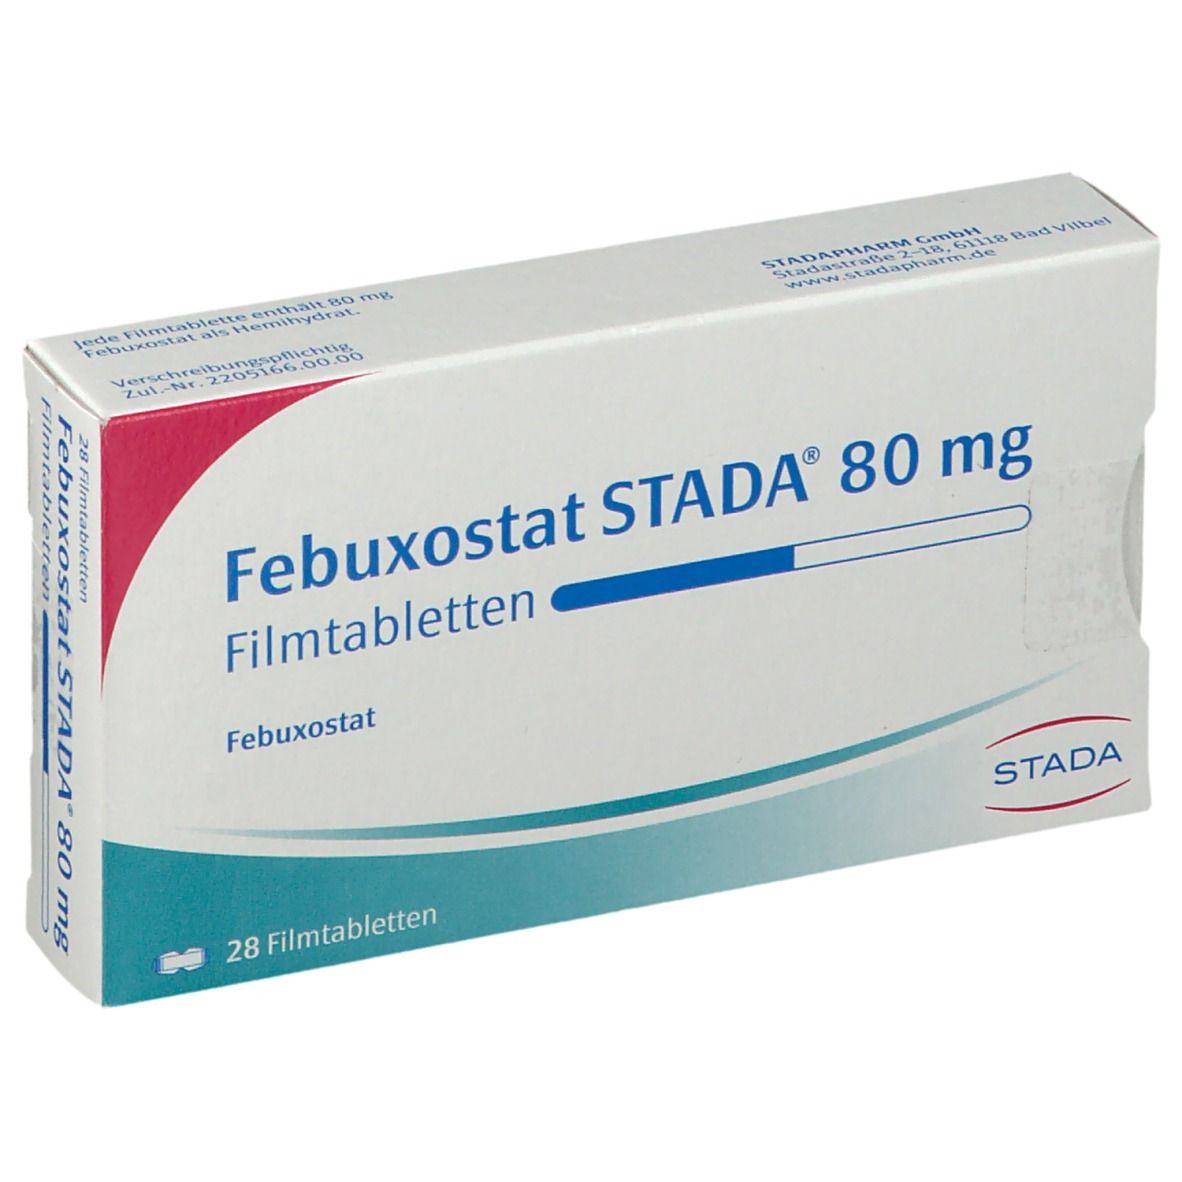 Febuxostat STADA® 80 mg